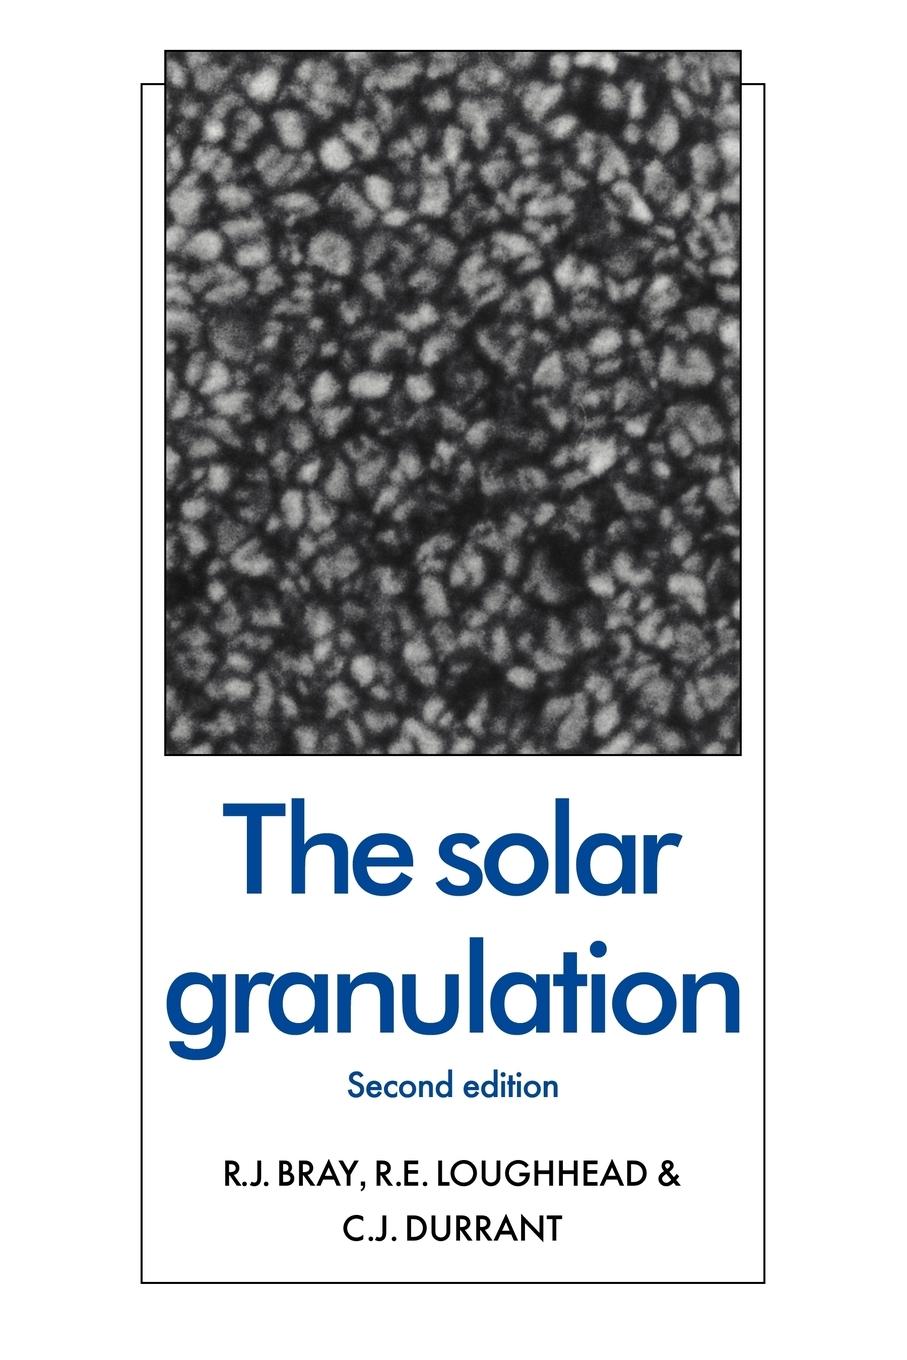 The Solar Granulation - Bray, R. J. Loughhead, R. E. Durrant, C. J.